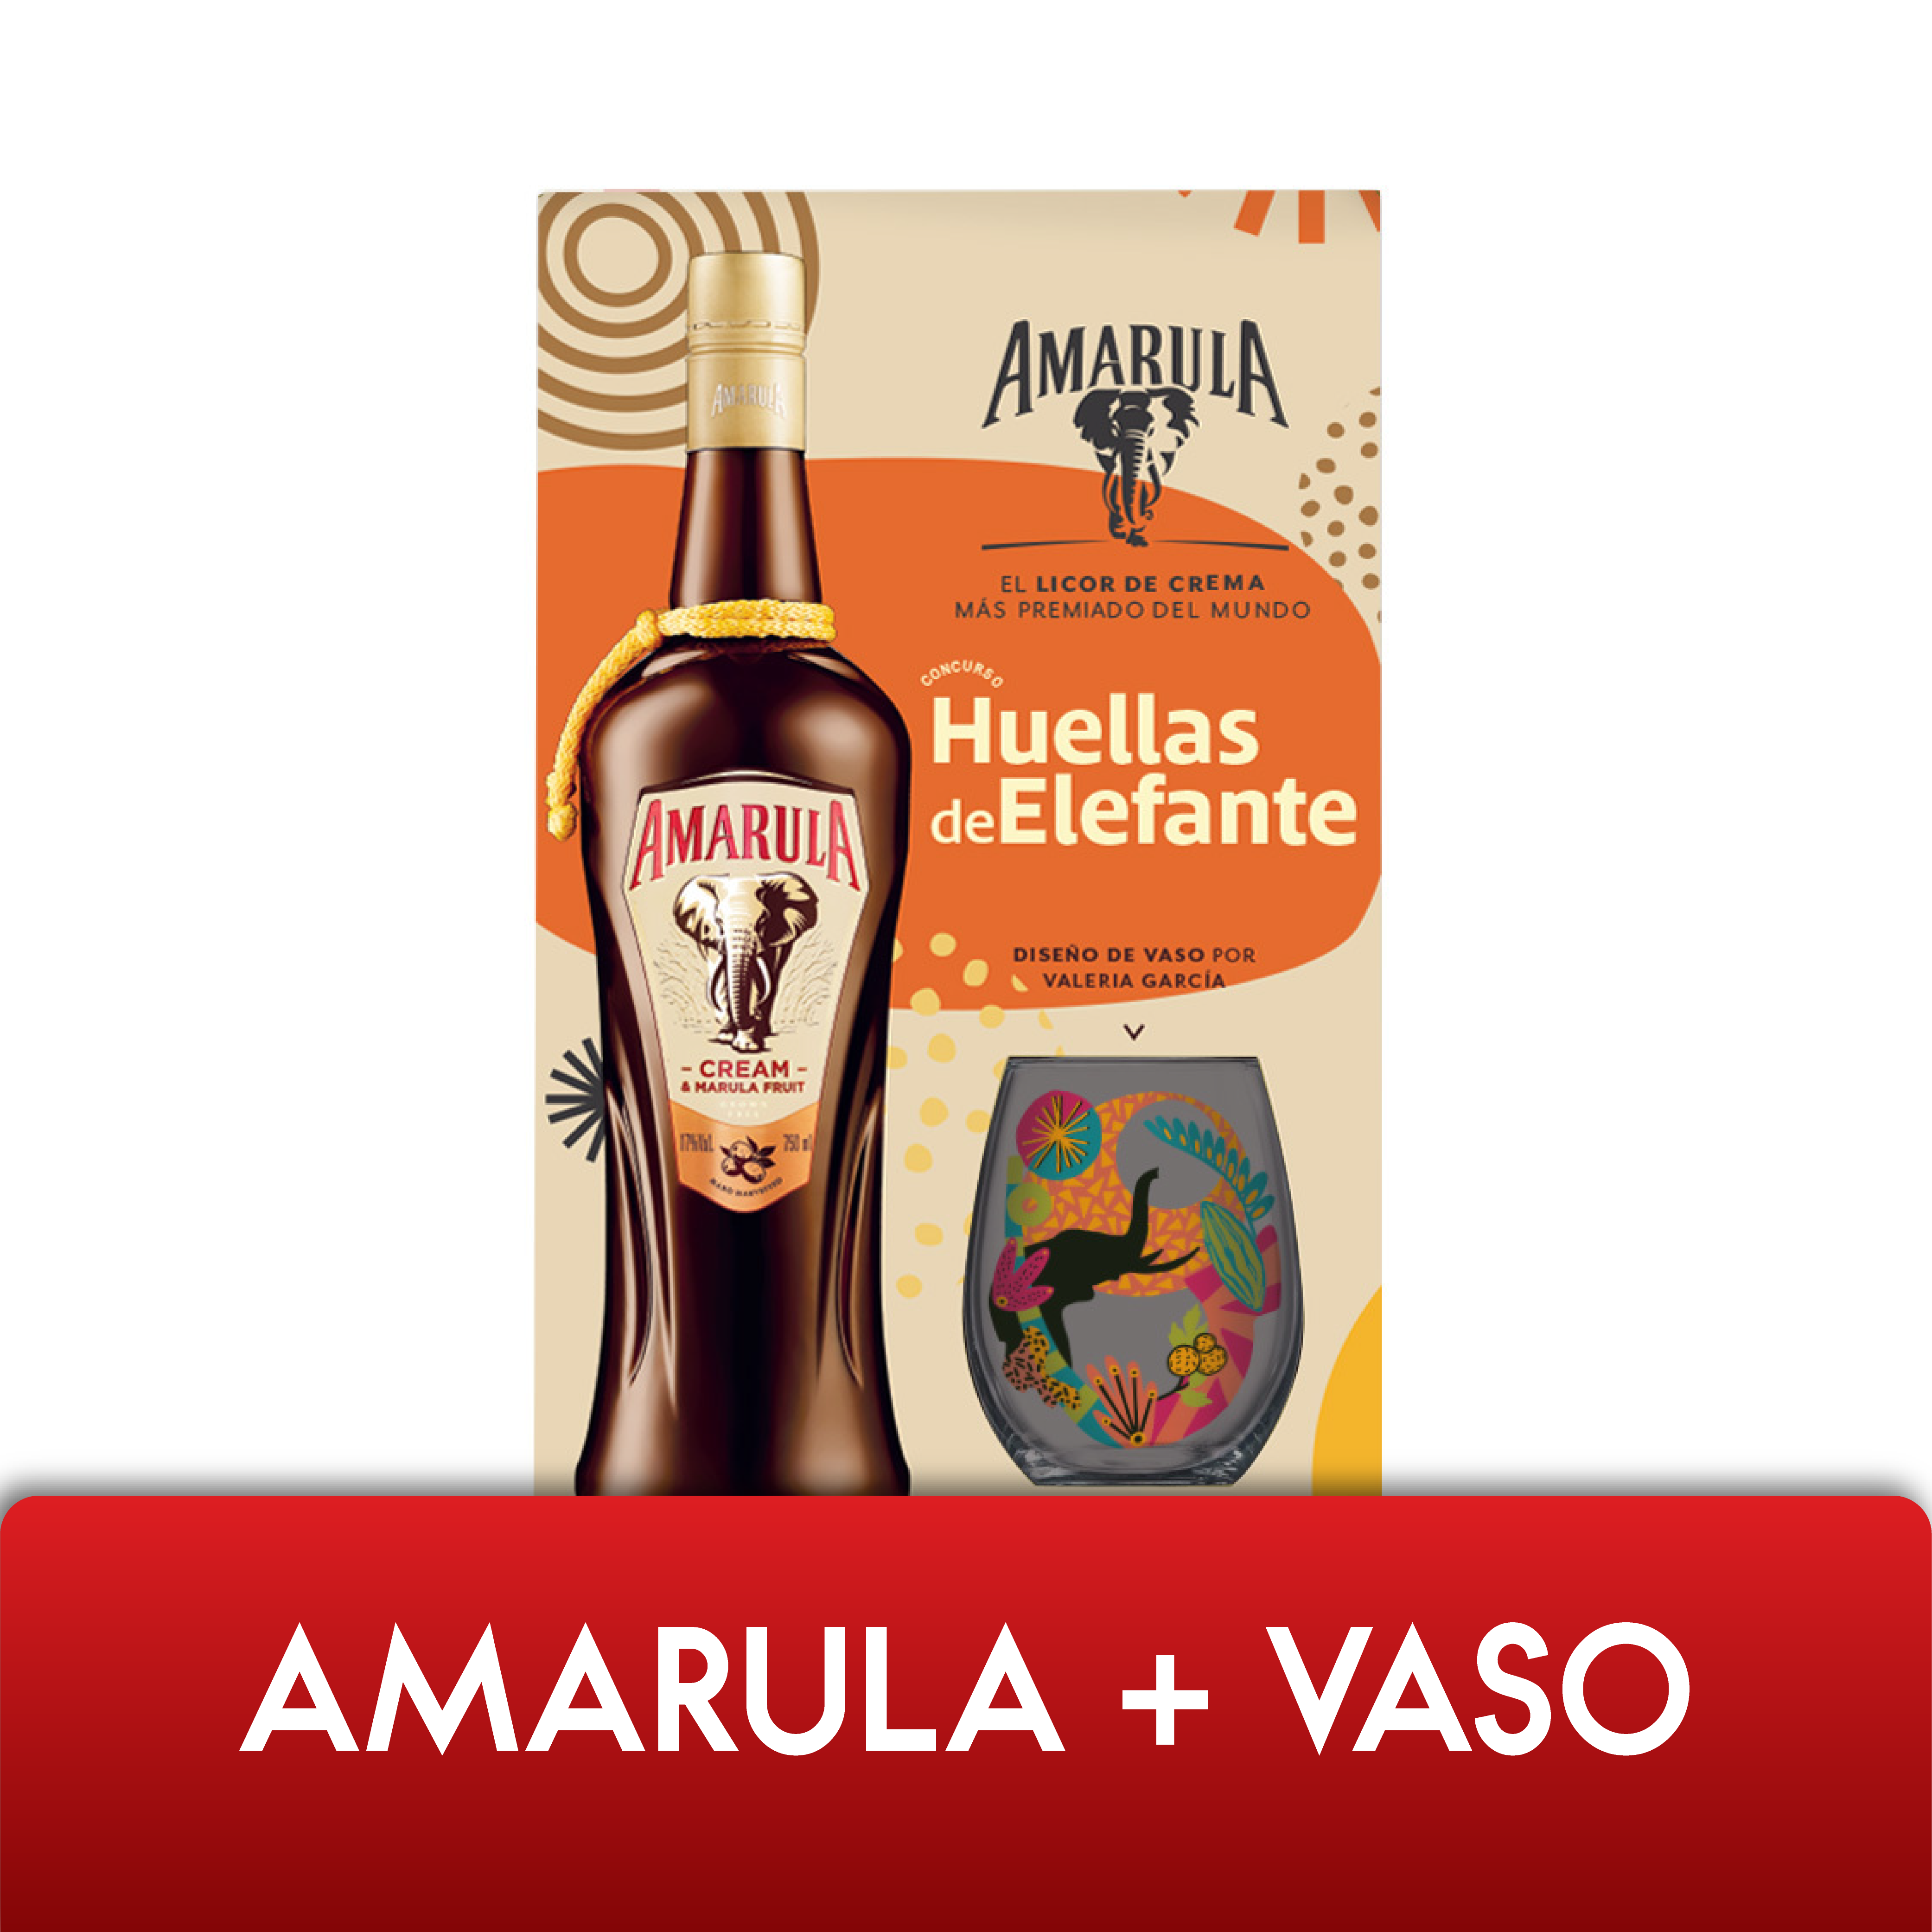 Amarula + Vaso